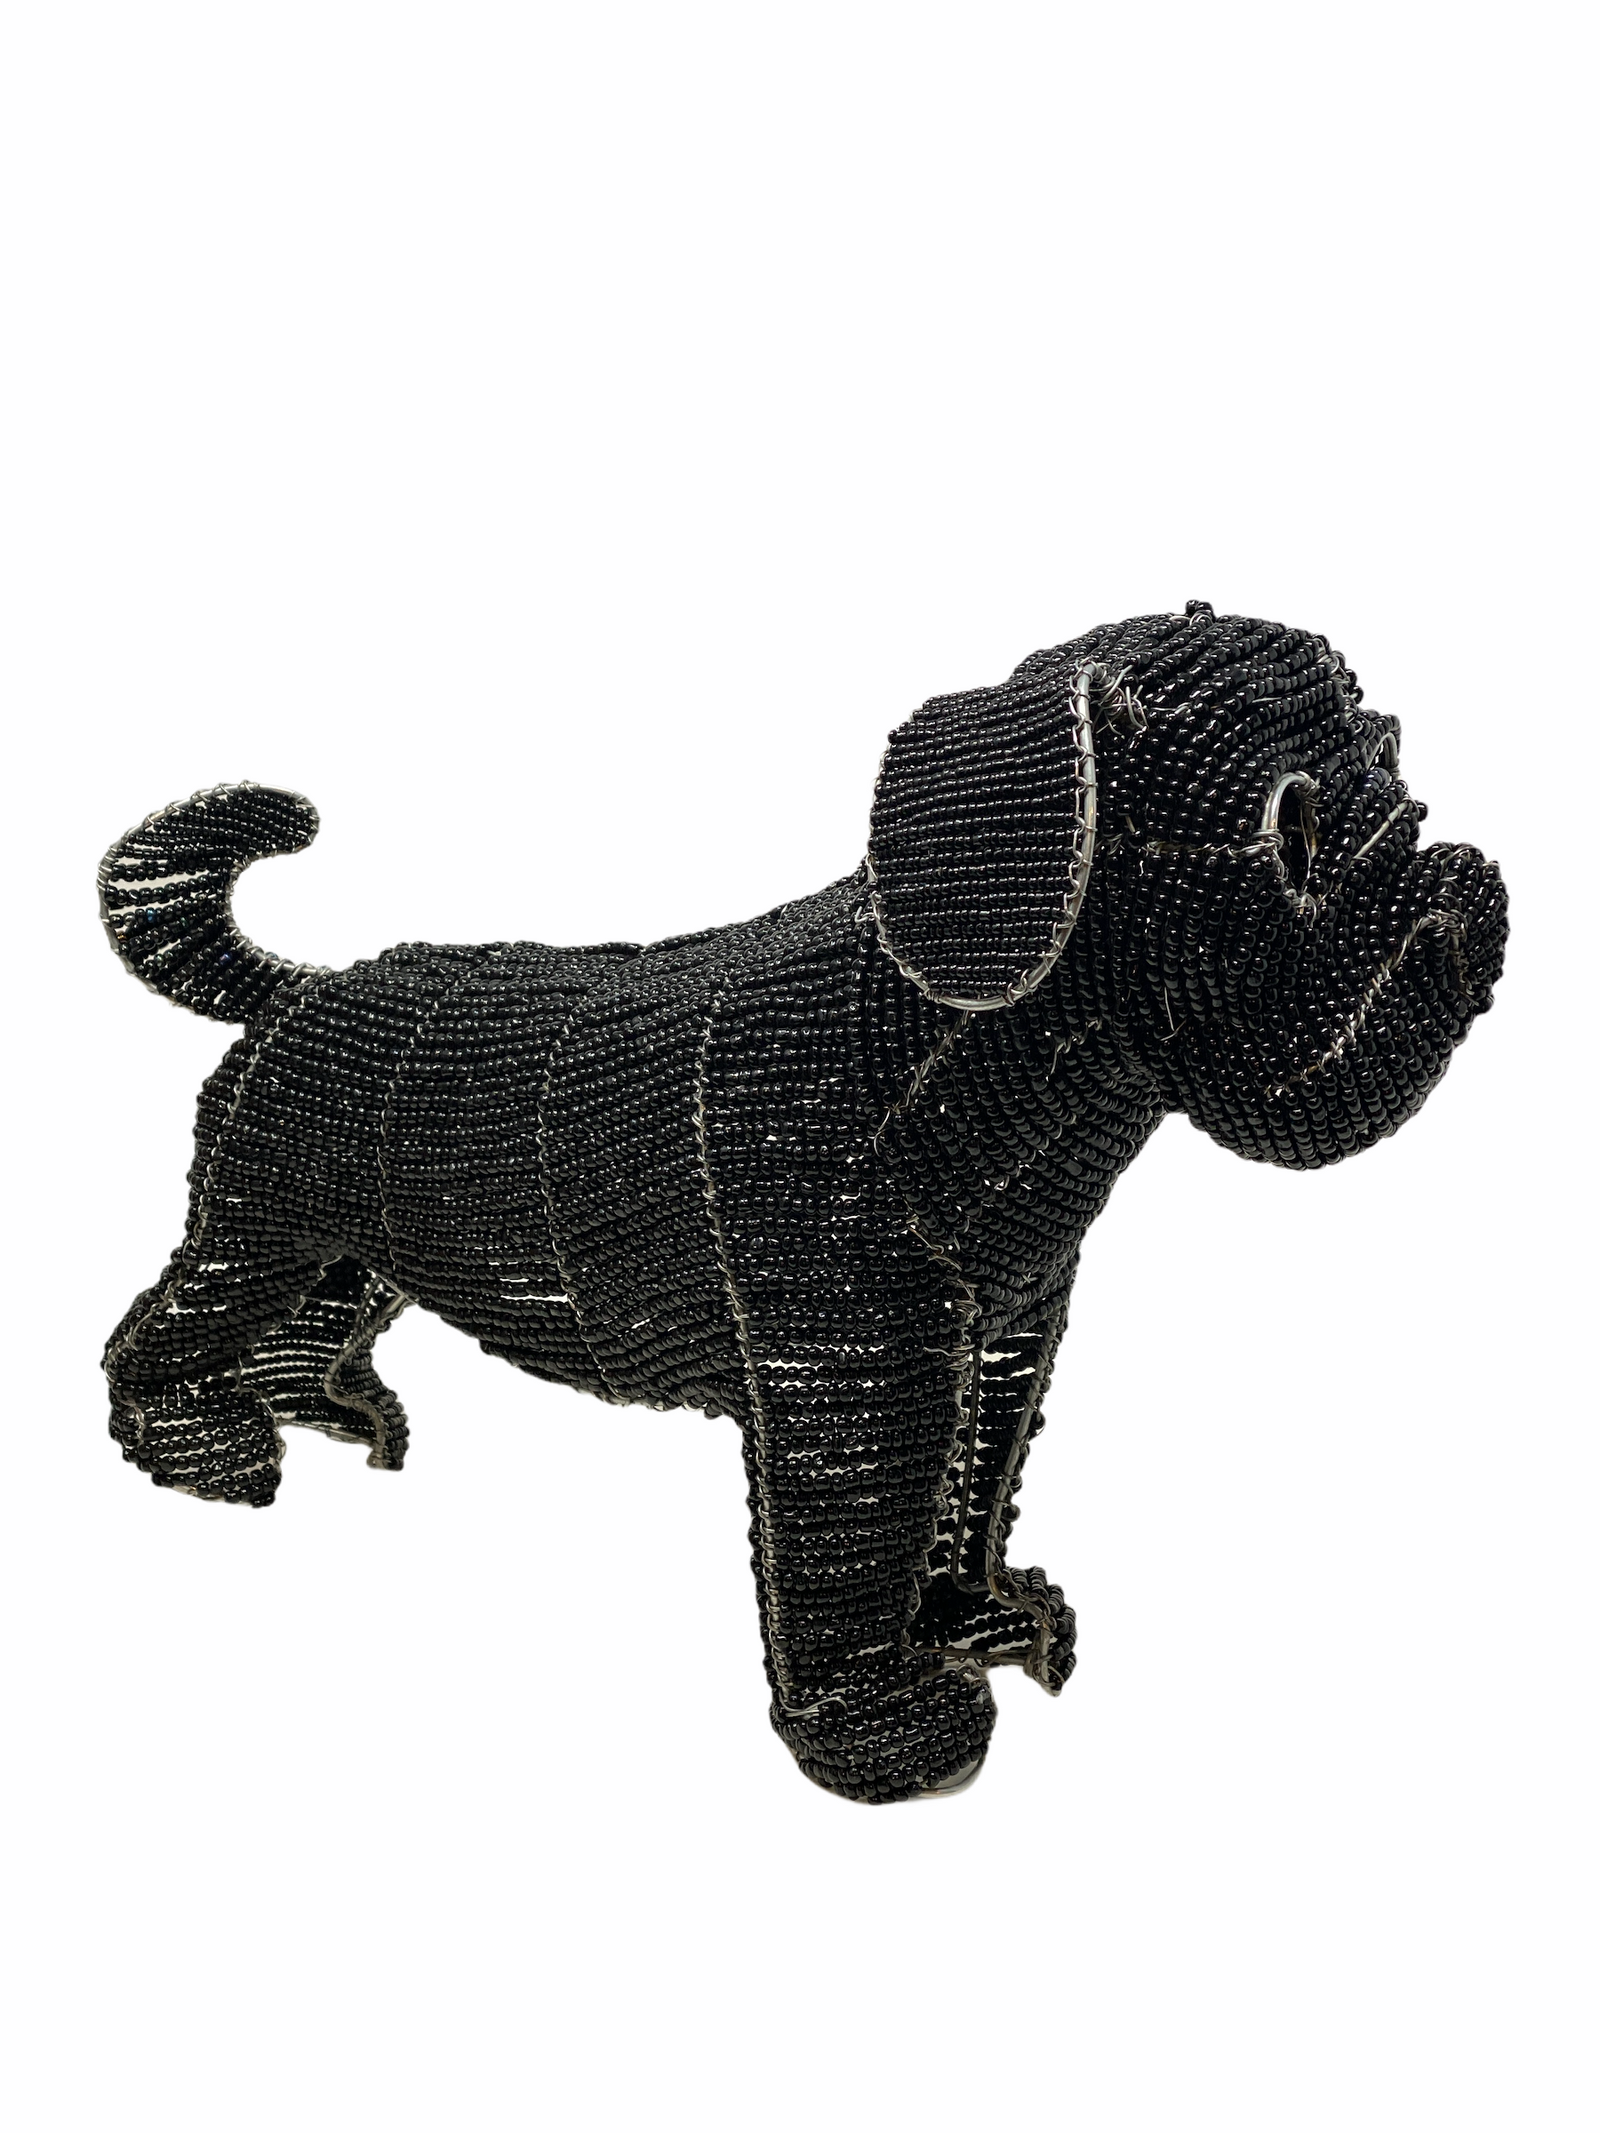 Hand Beaded Dog Sculpture - French Bulldog